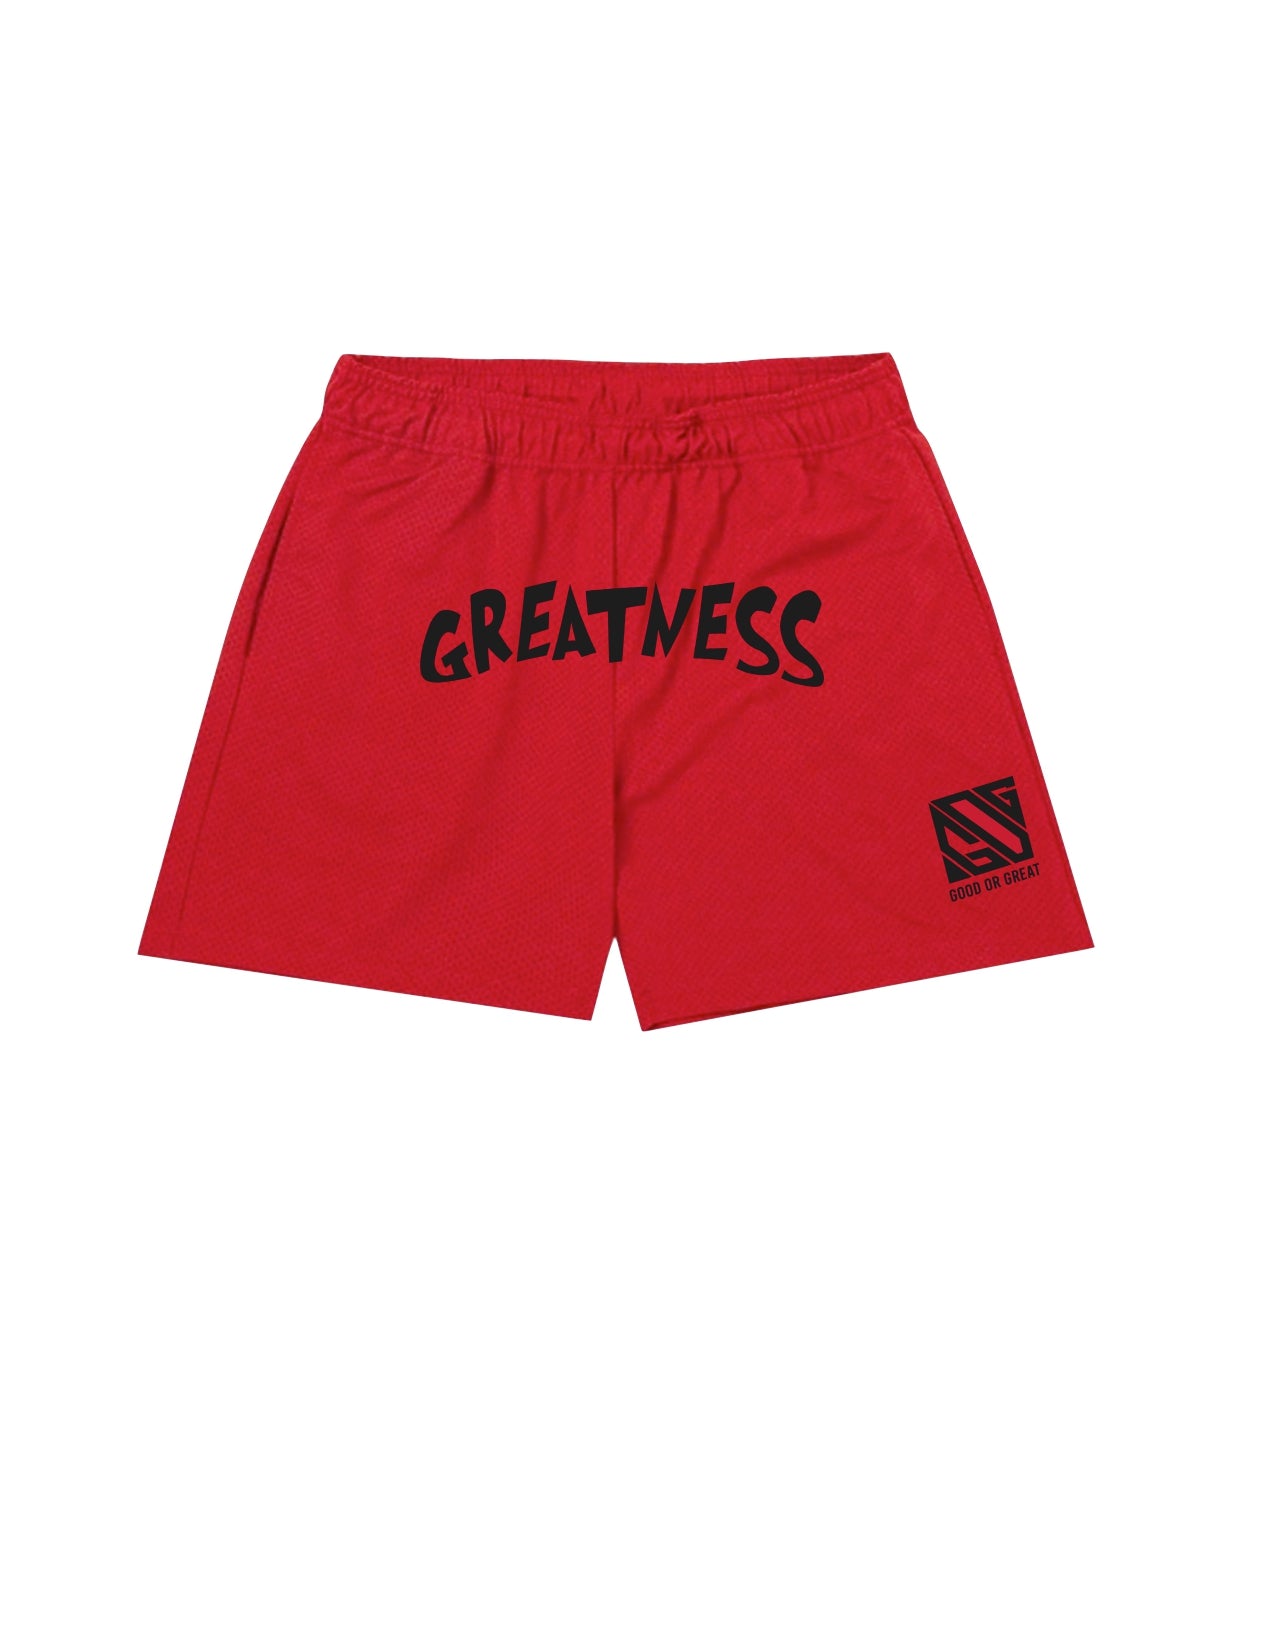 Greatness Mesh Shorts (Raging Reds)